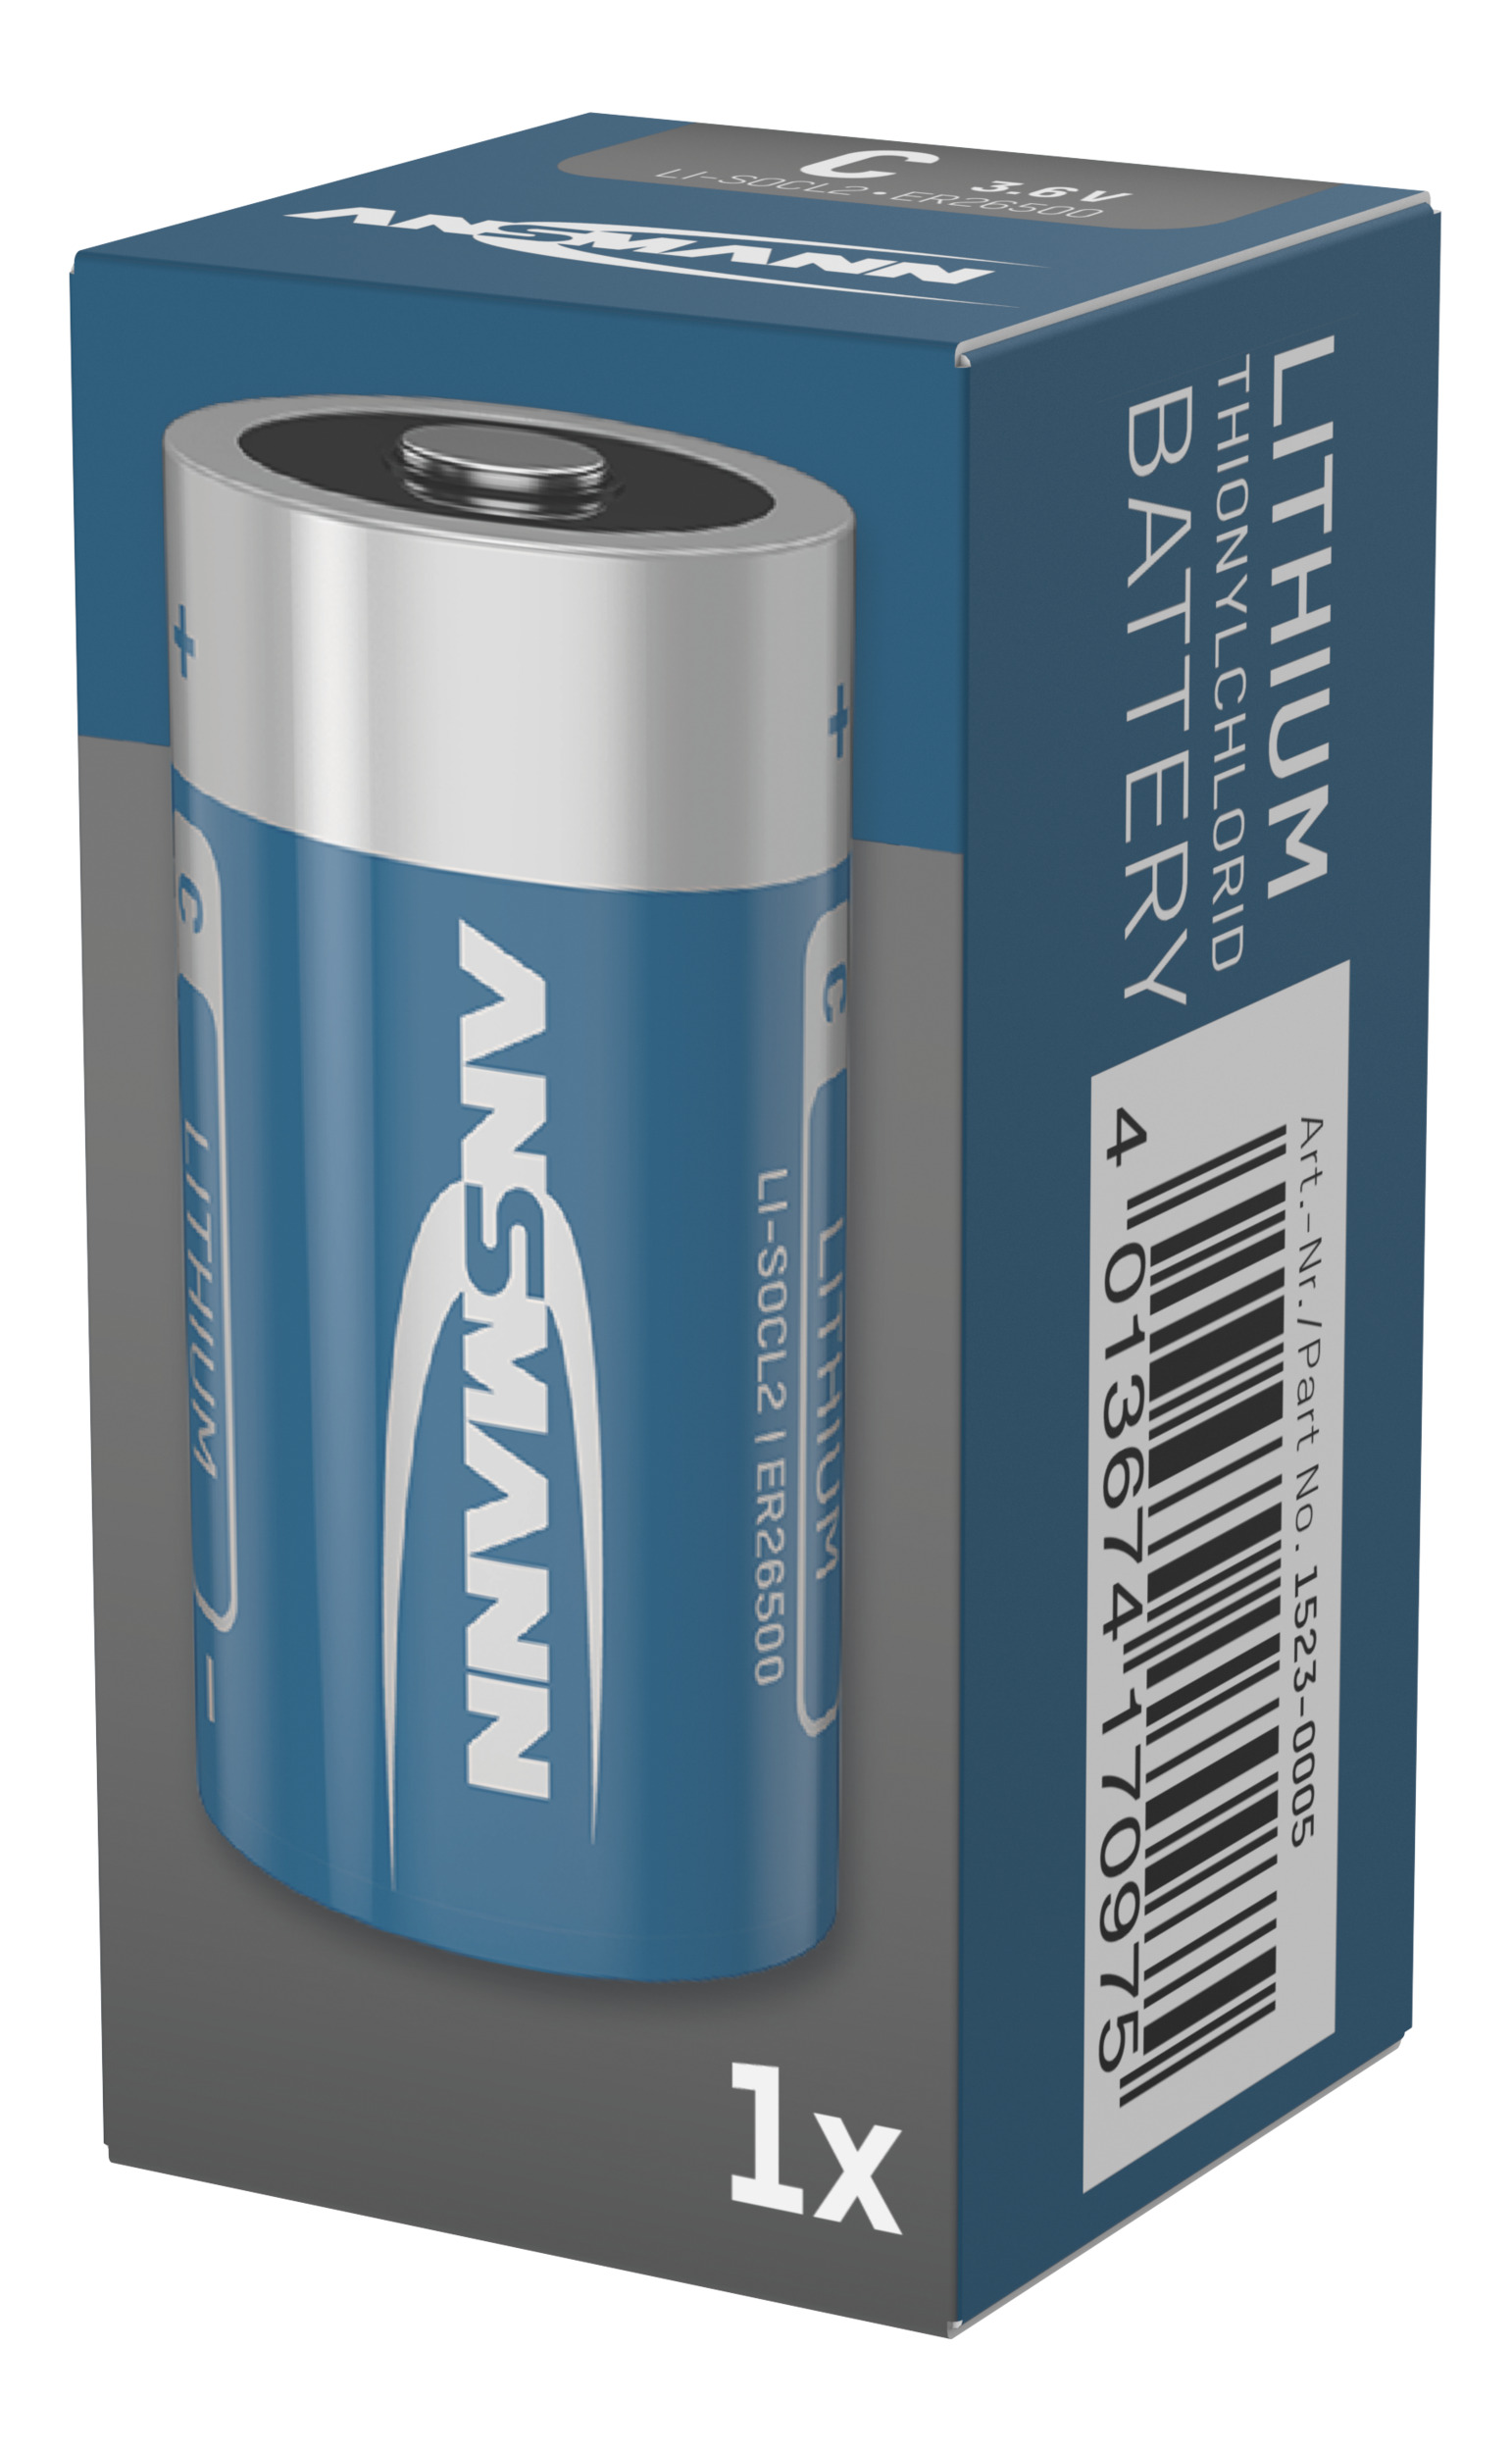 ANSMANN Lithium-Thionylchlorid Batterie ER26500 C 3,6 Volt 1523-0005